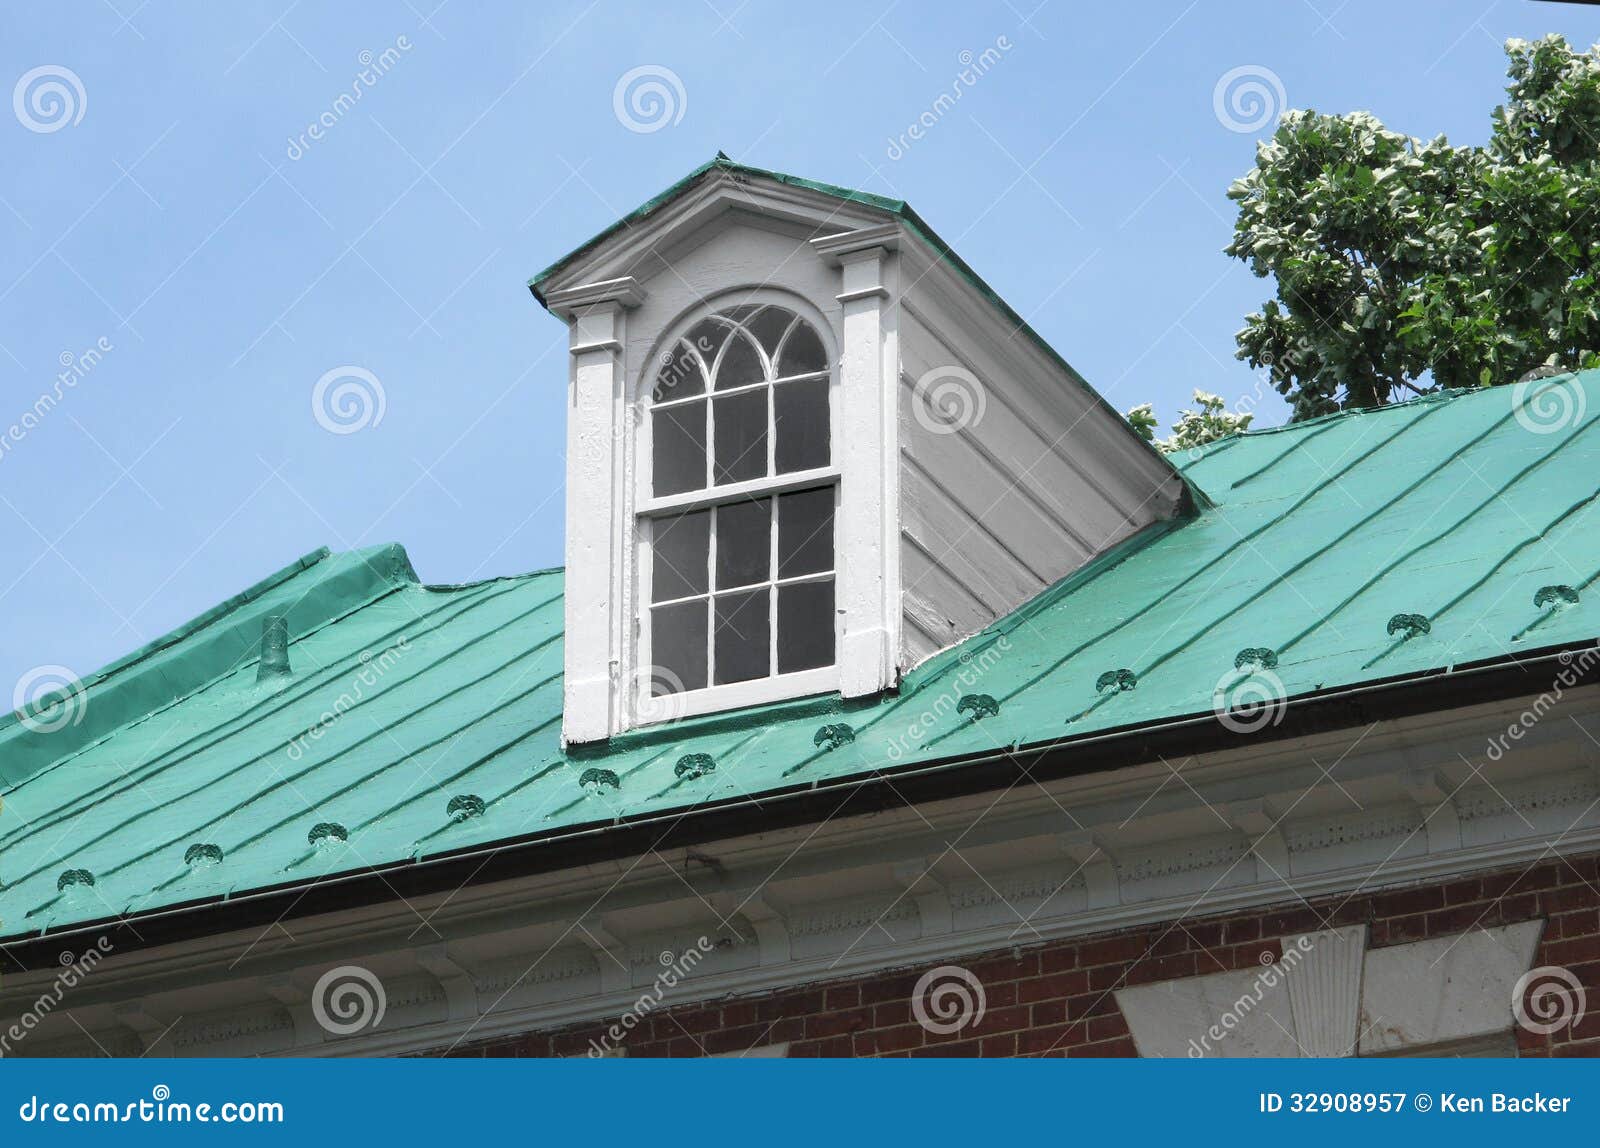 dormer window on roof